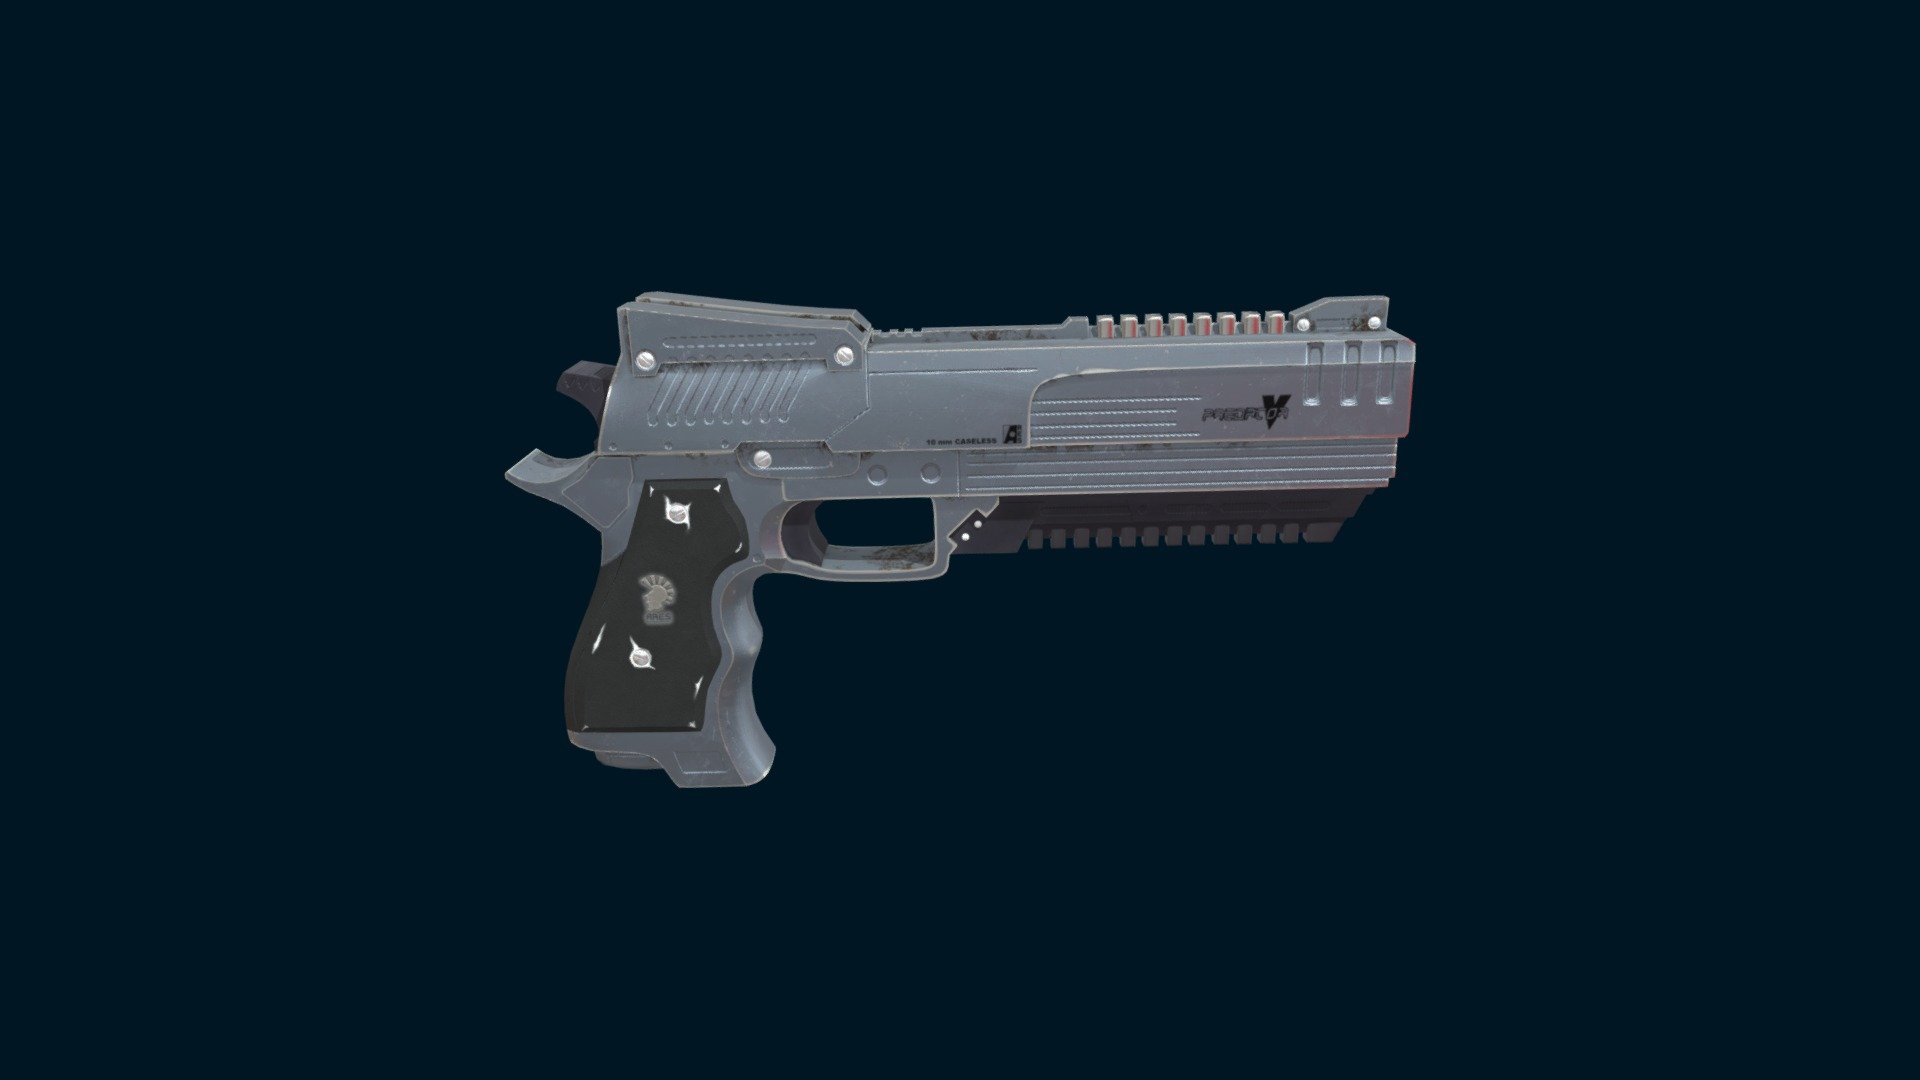 Ares Predator V Shadowrun Prg Heavy Pistol 3d Model By Chaoscrider 6c0b52f Sketchfab 8244